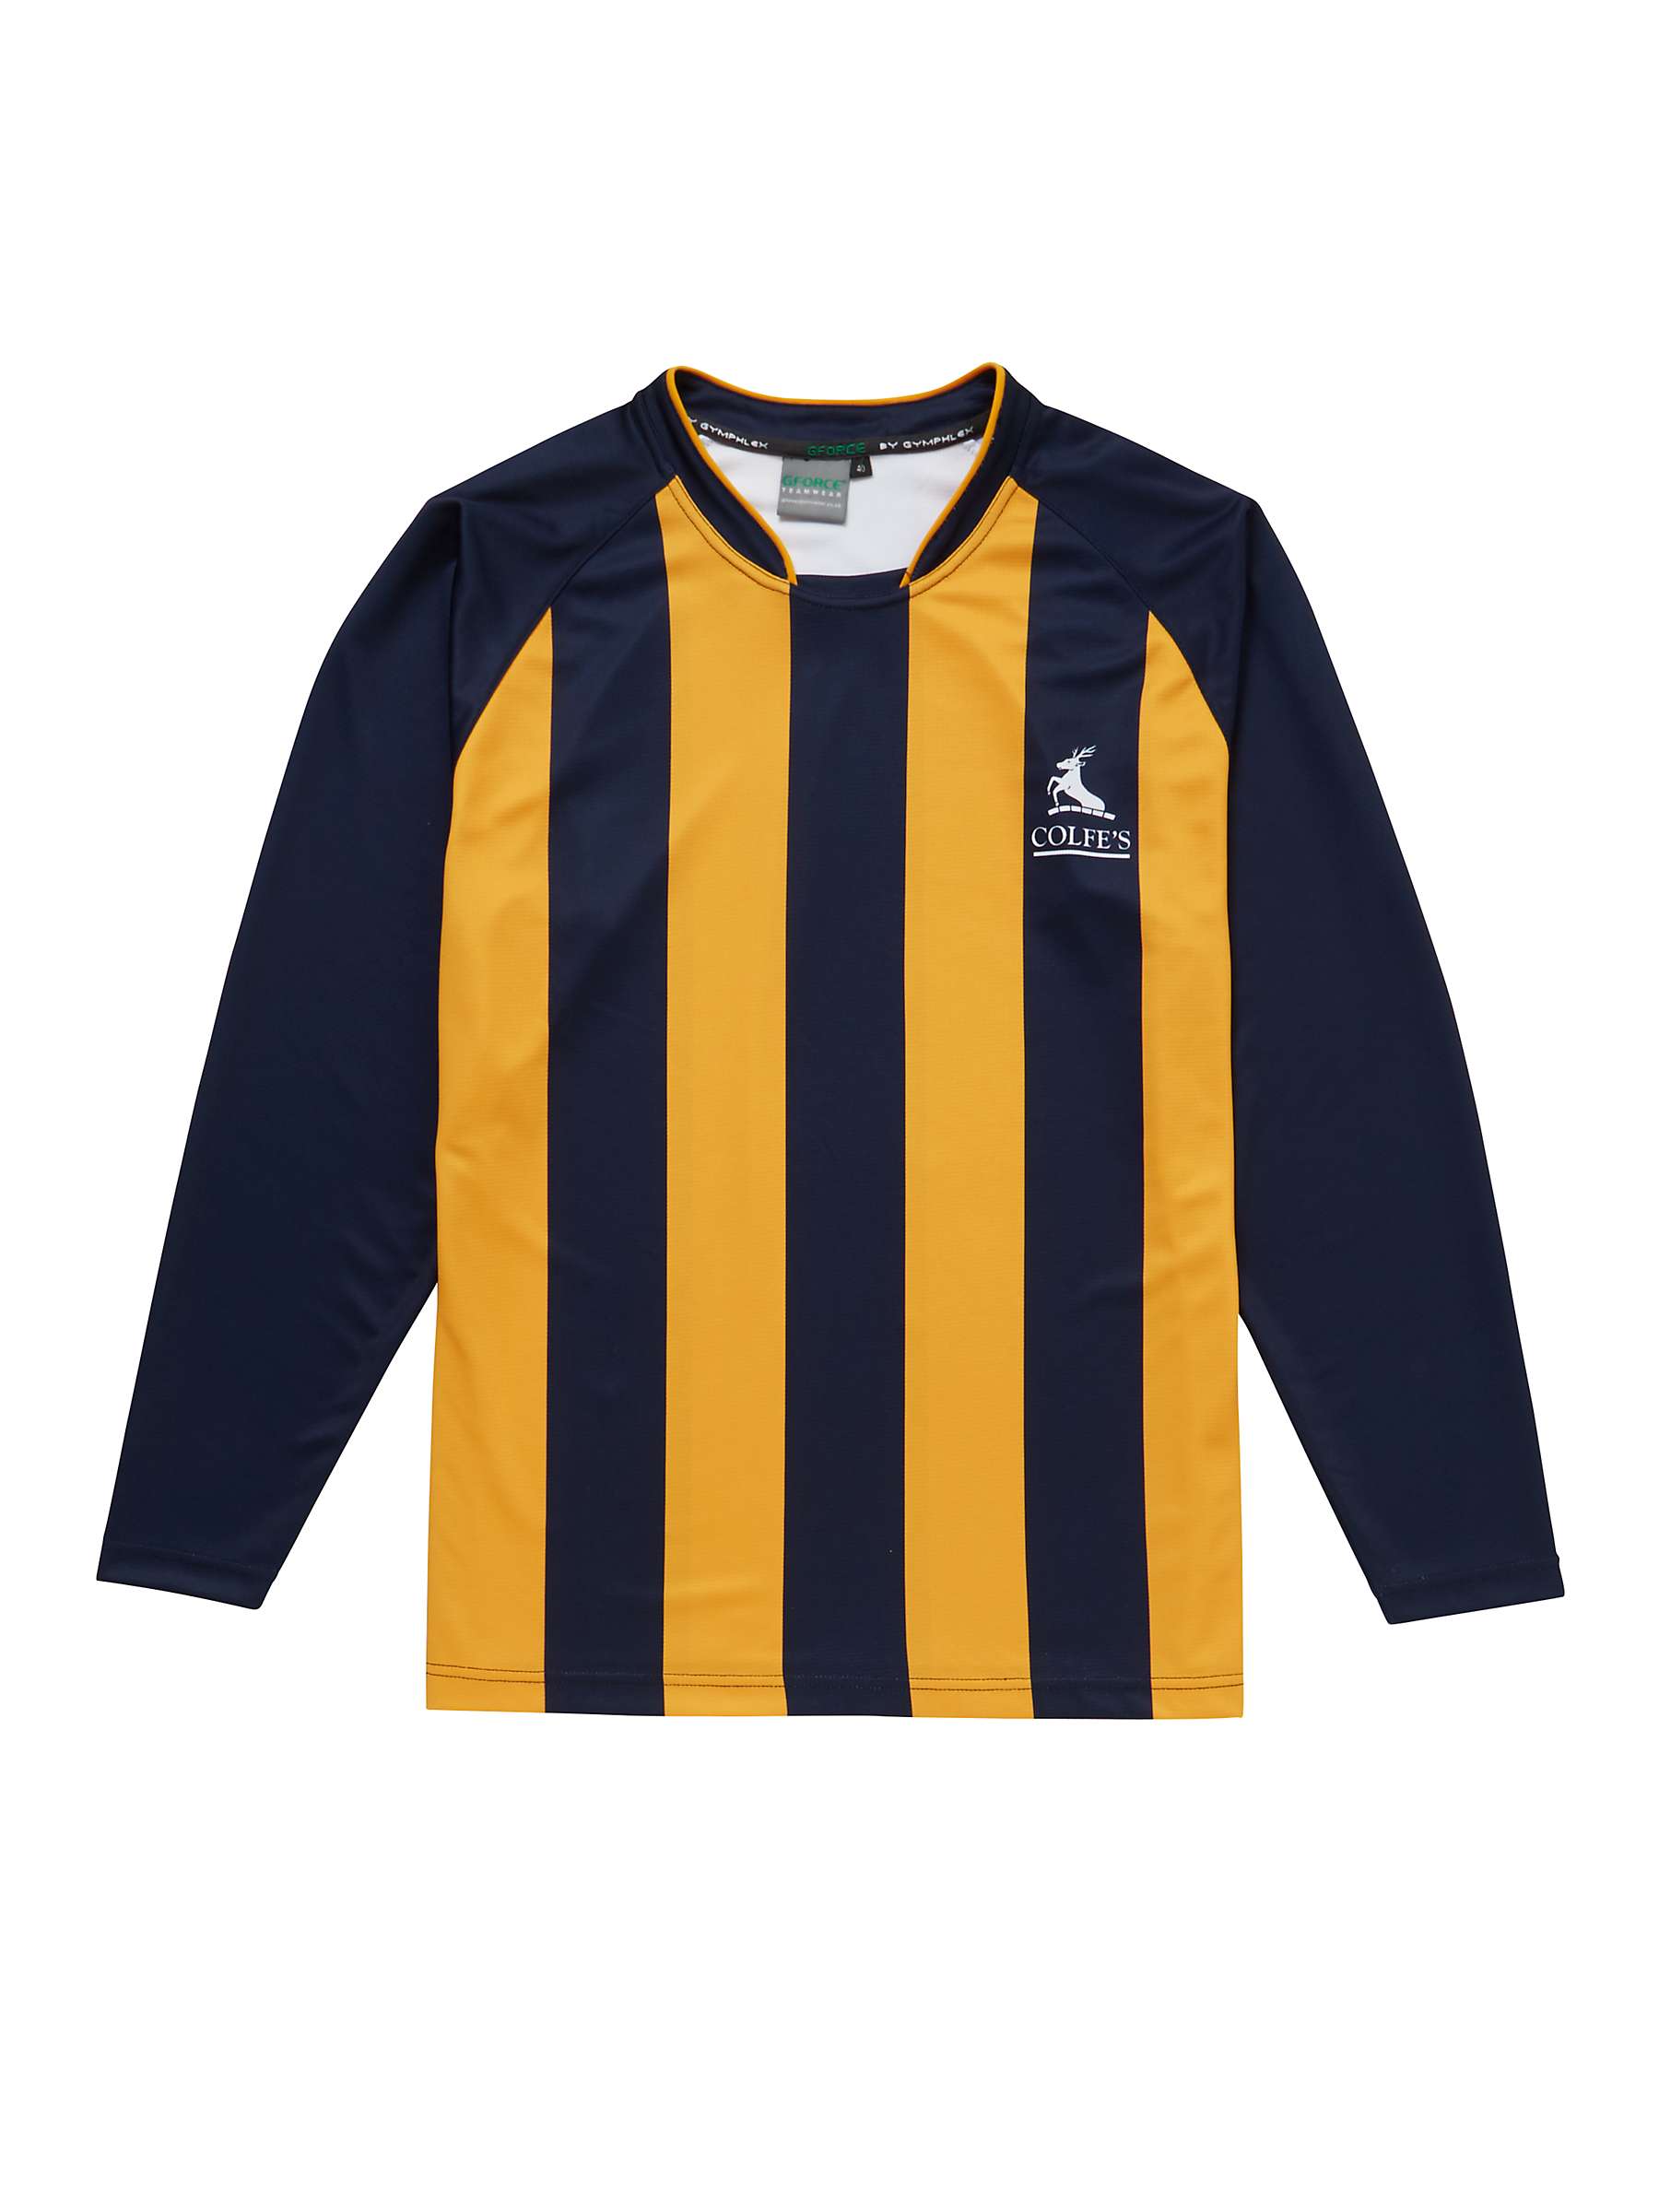 Buy Colfe's School Boys' Football Shirt, Navy/Amber Online at johnlewis.com